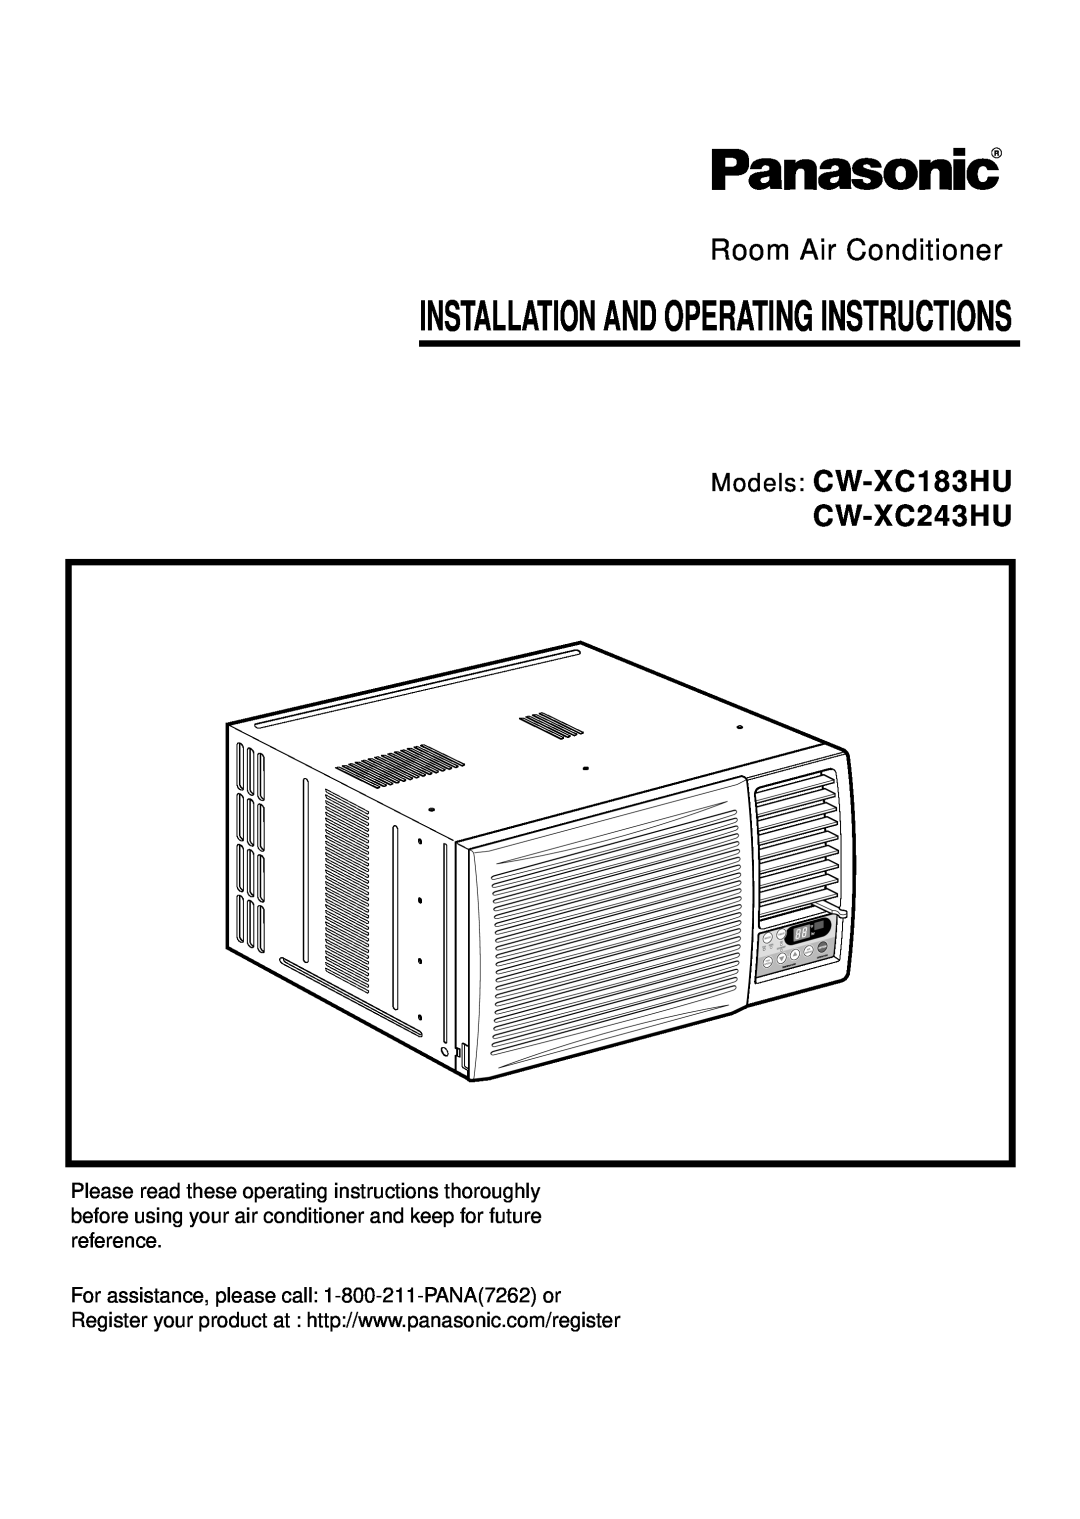 Panasonic manual Models CW-XC183HU CW-XC243HU, Installation And Operating Instructions, Room Air Conditioner 